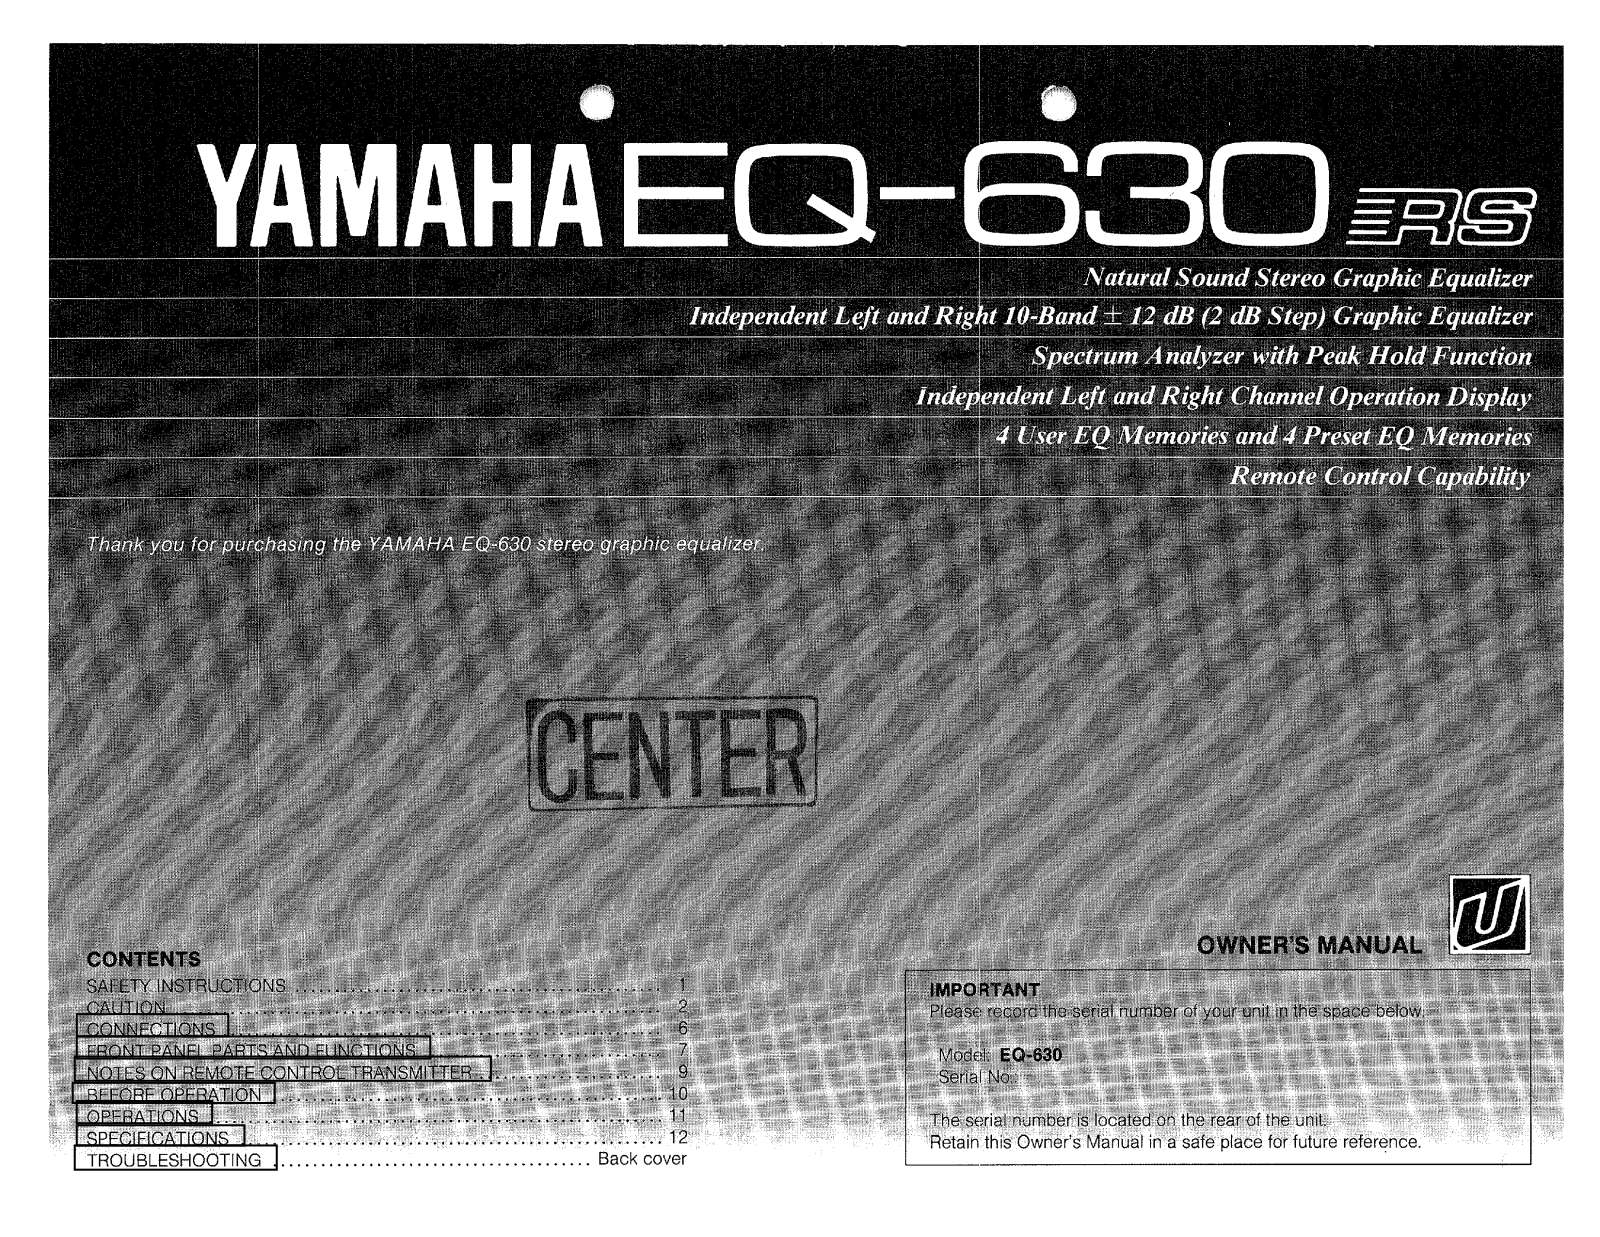 Yamaha EQ-630 Owners manual